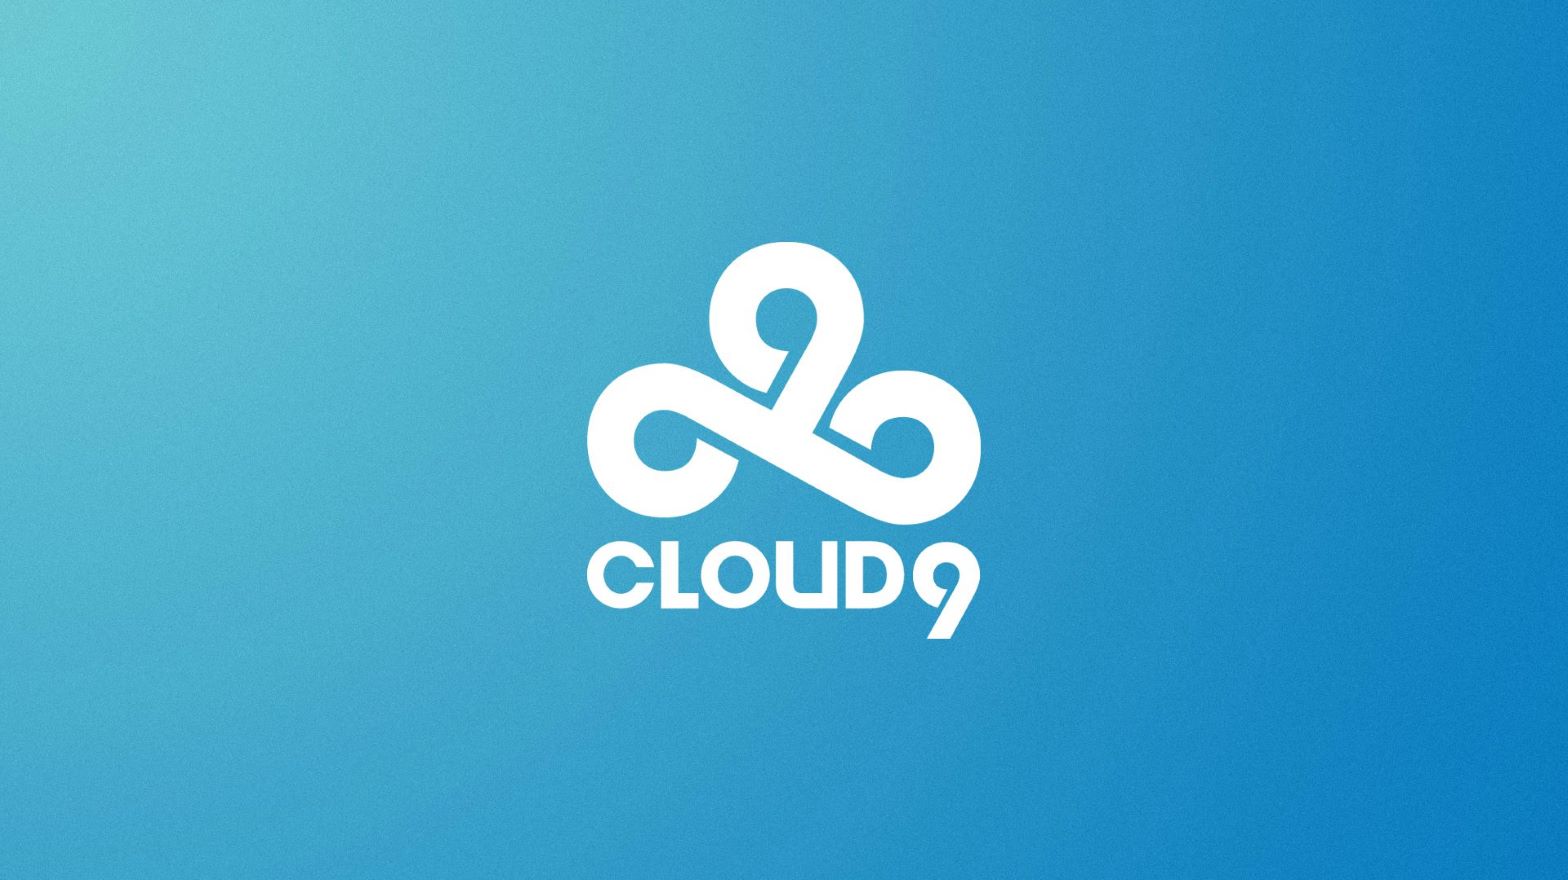 cloud 9 logo on a blue background